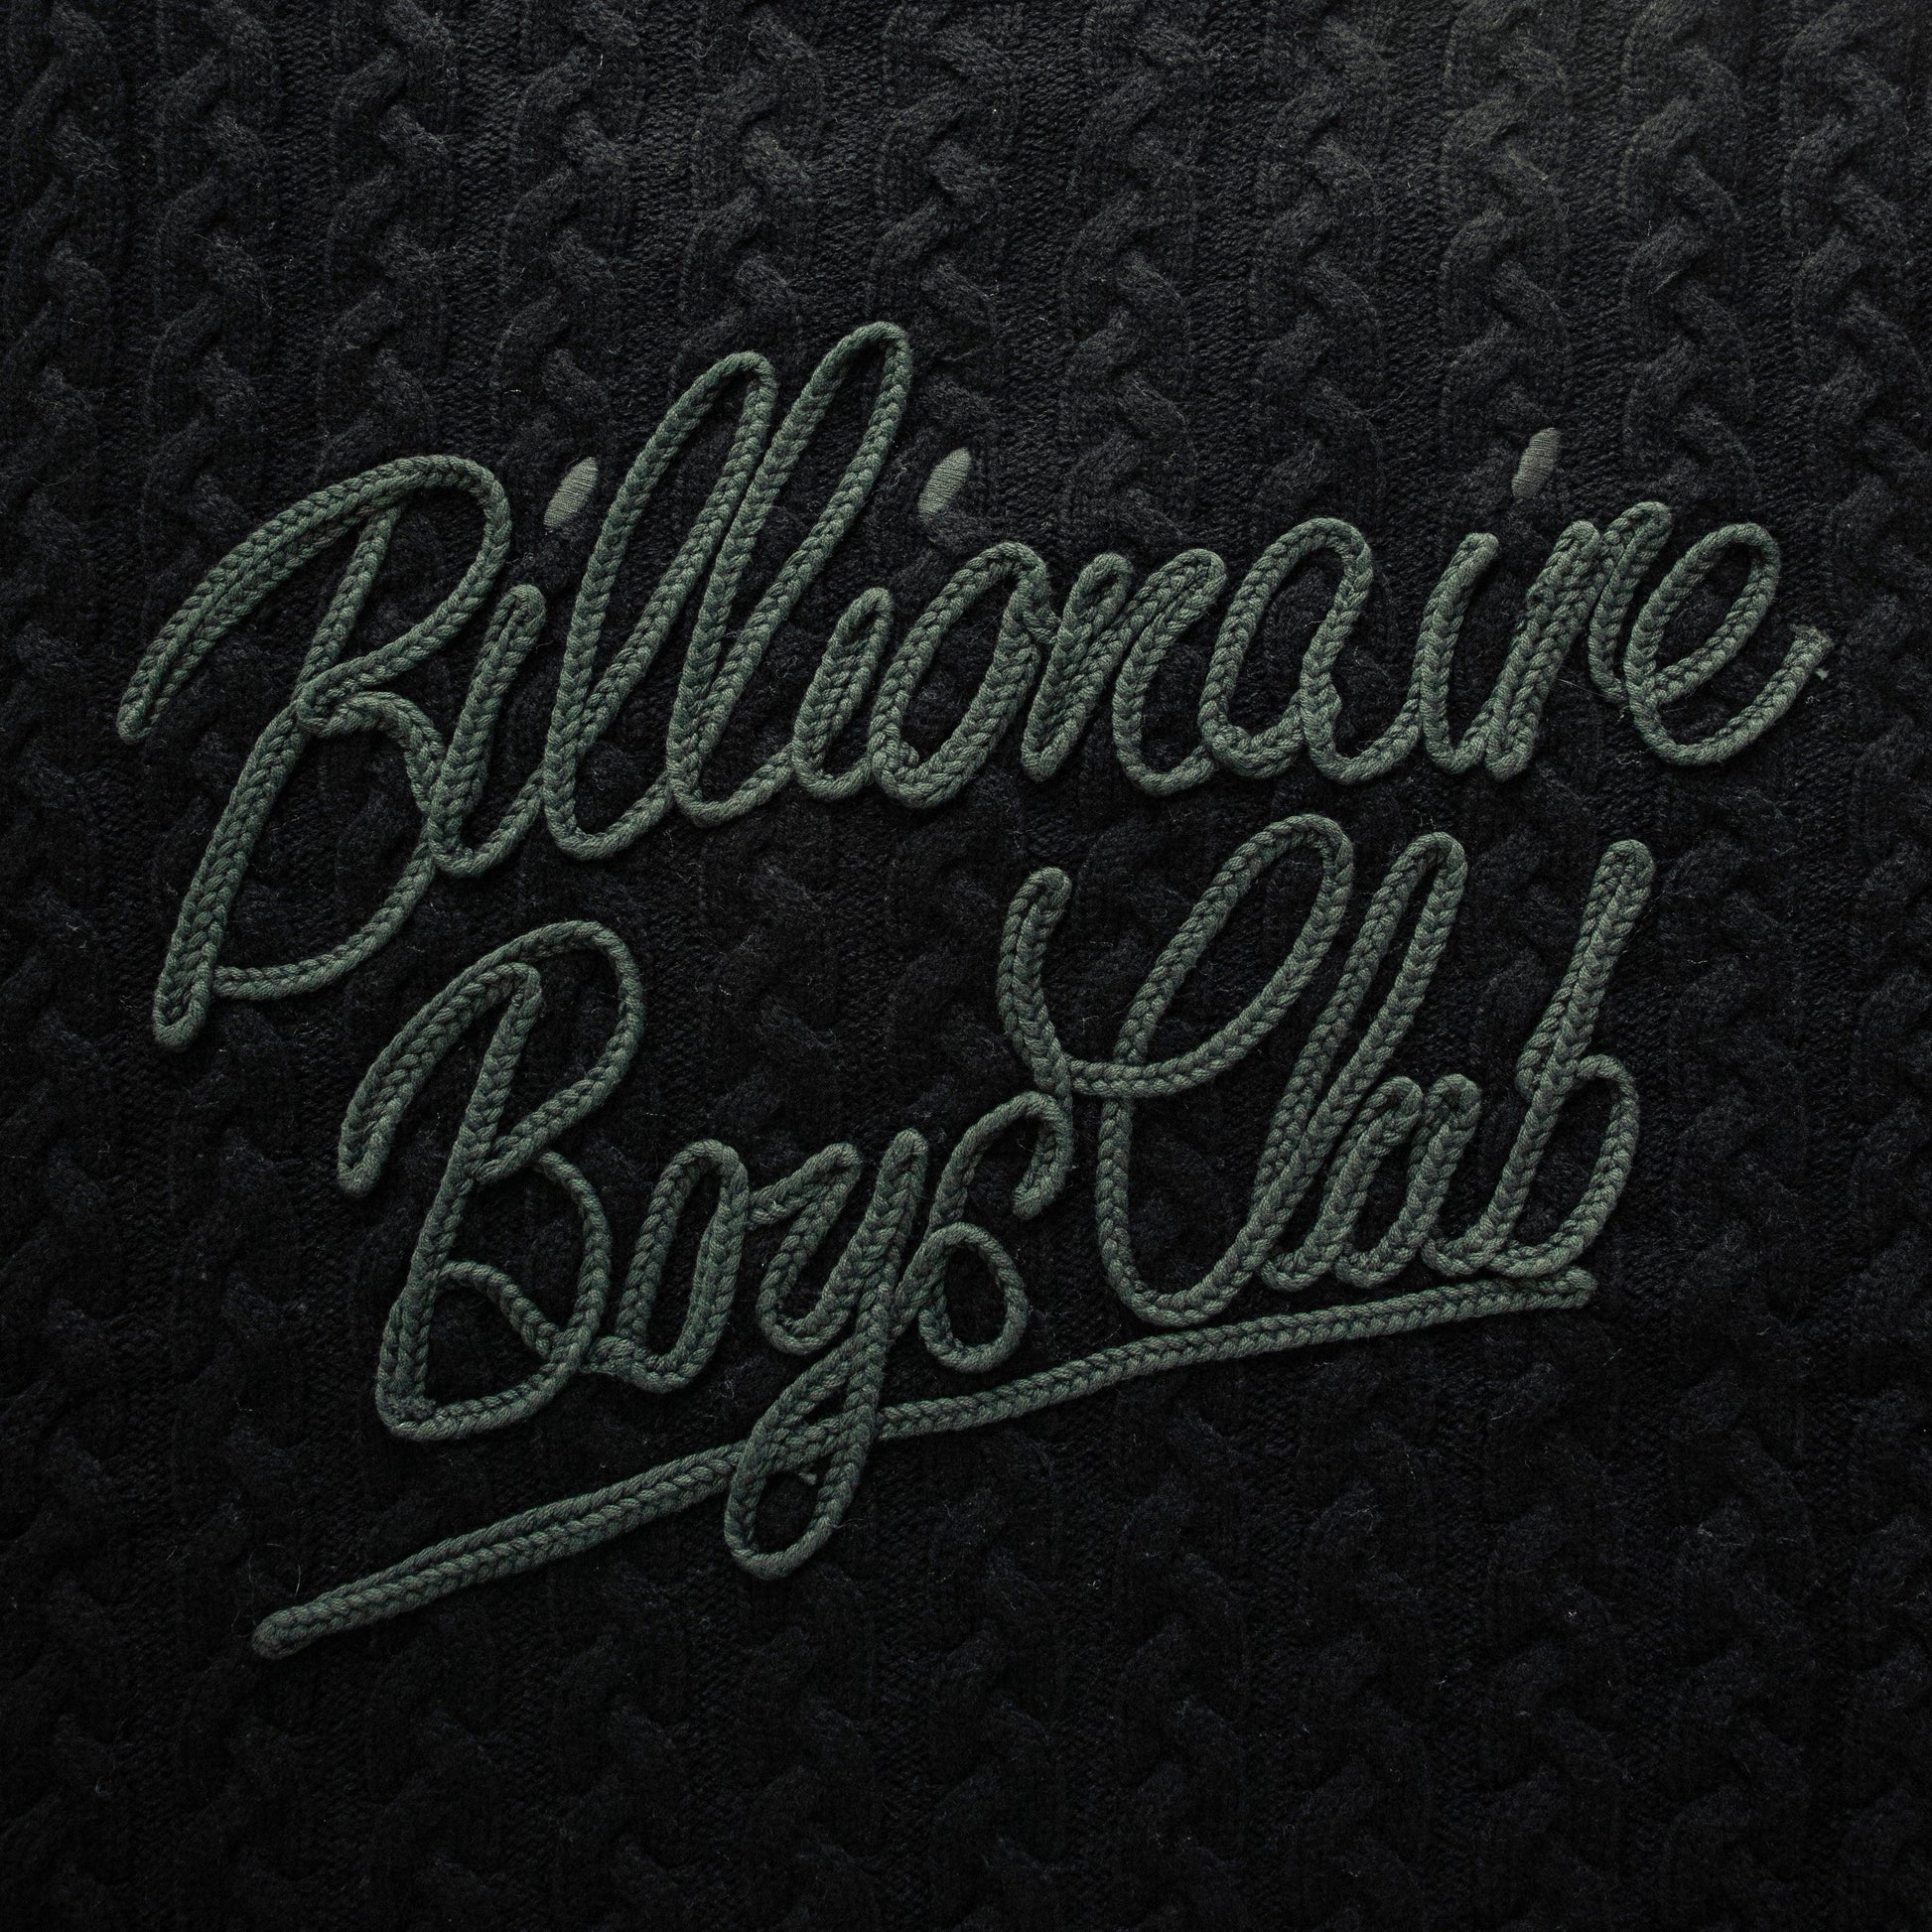 SIGNATURE SWEATER - Billionaire Boys Club